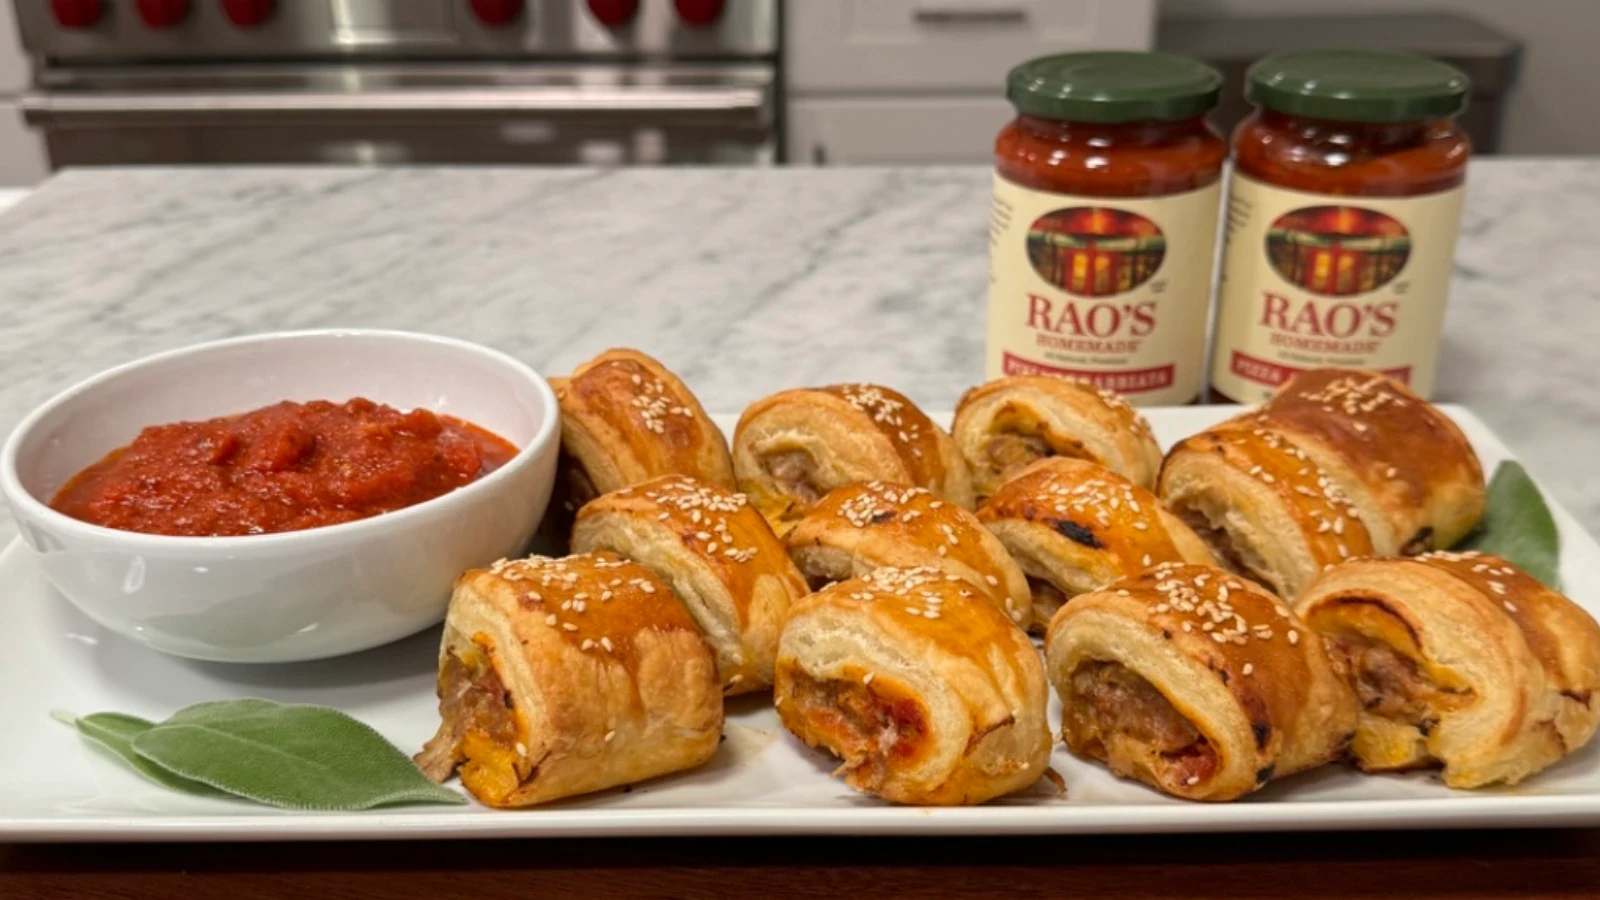 Image of @emmanuelduverneau’s Spicy Sausage Rolls with Rao’s Homemade Pizza Arrabbiata Sauce